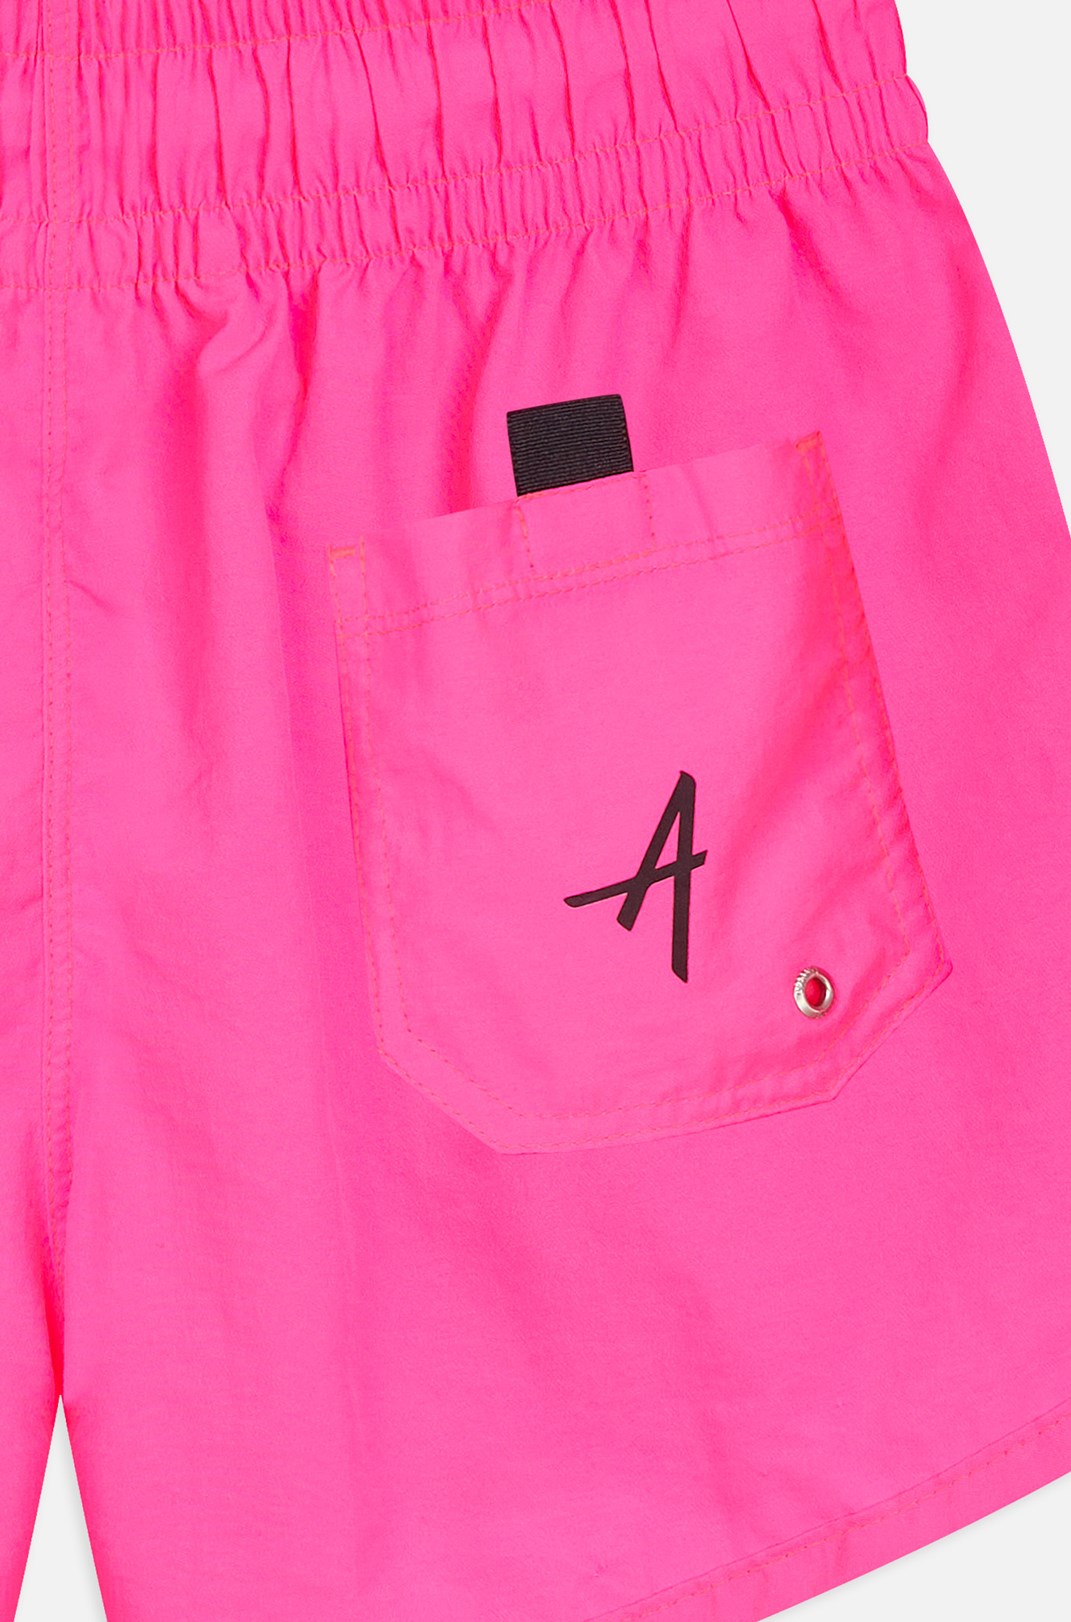 Shorts Feminino Approve Wet Paradise Pink